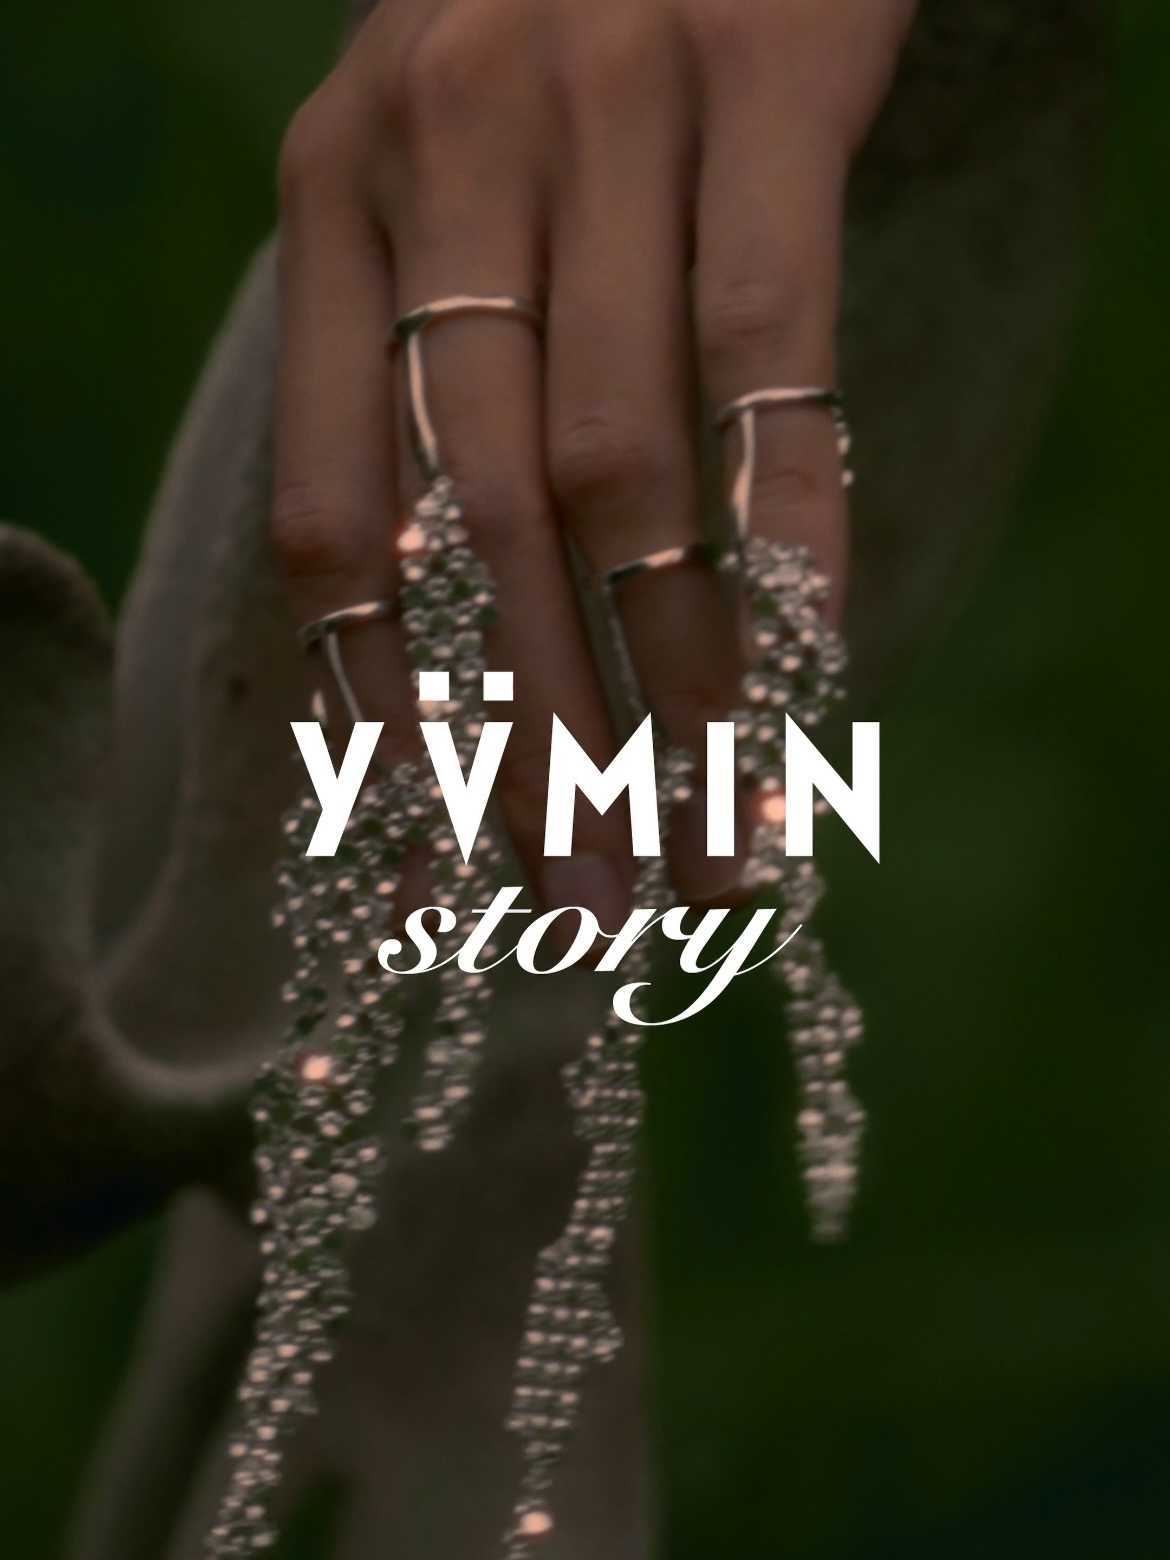 Yvmin尤目 概念首饰 - Story Video “DUSK” - 竖屏